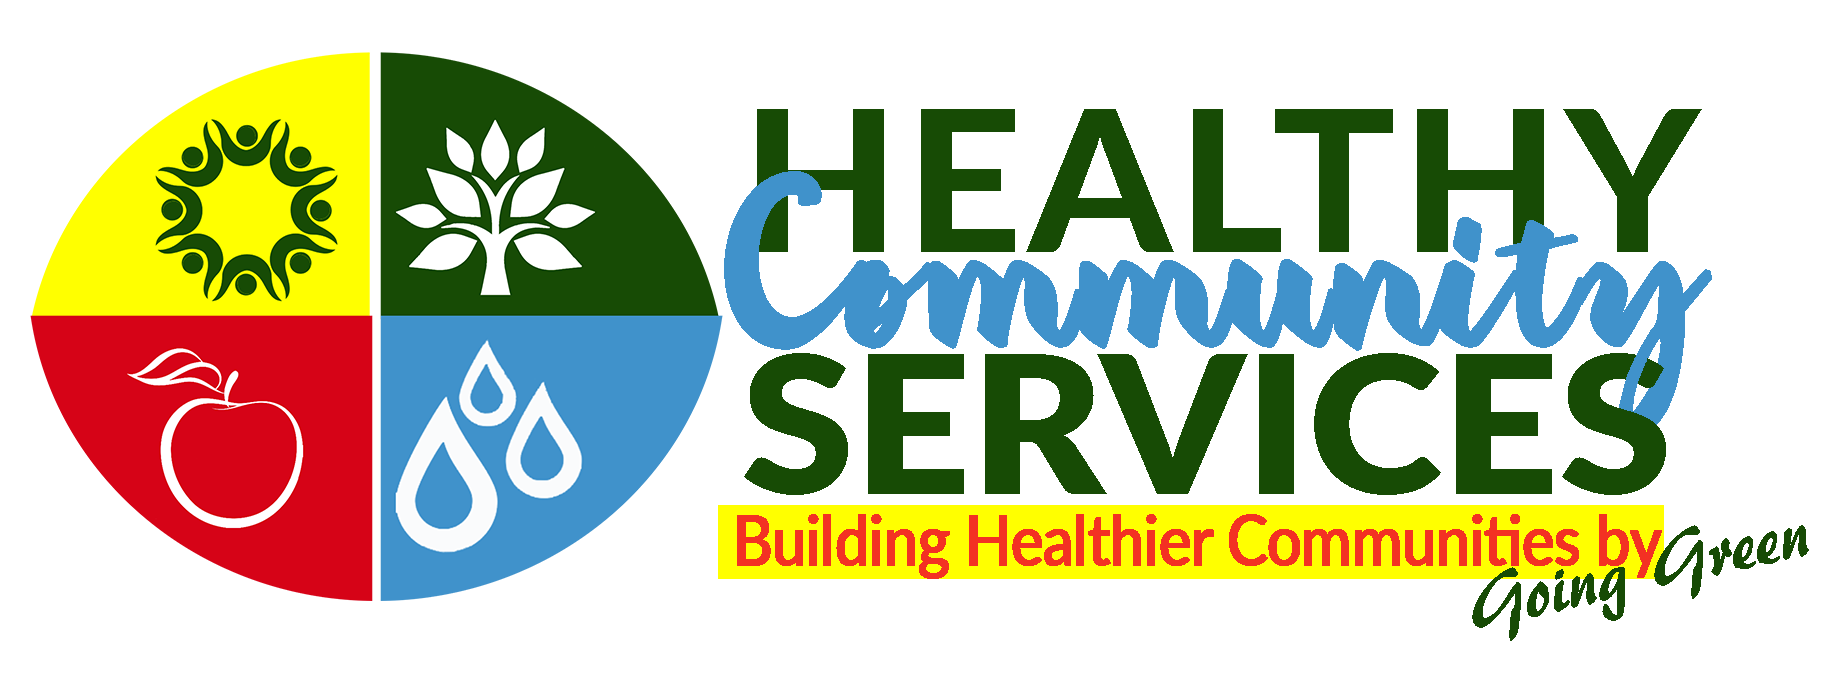 Healthy Community Services logo